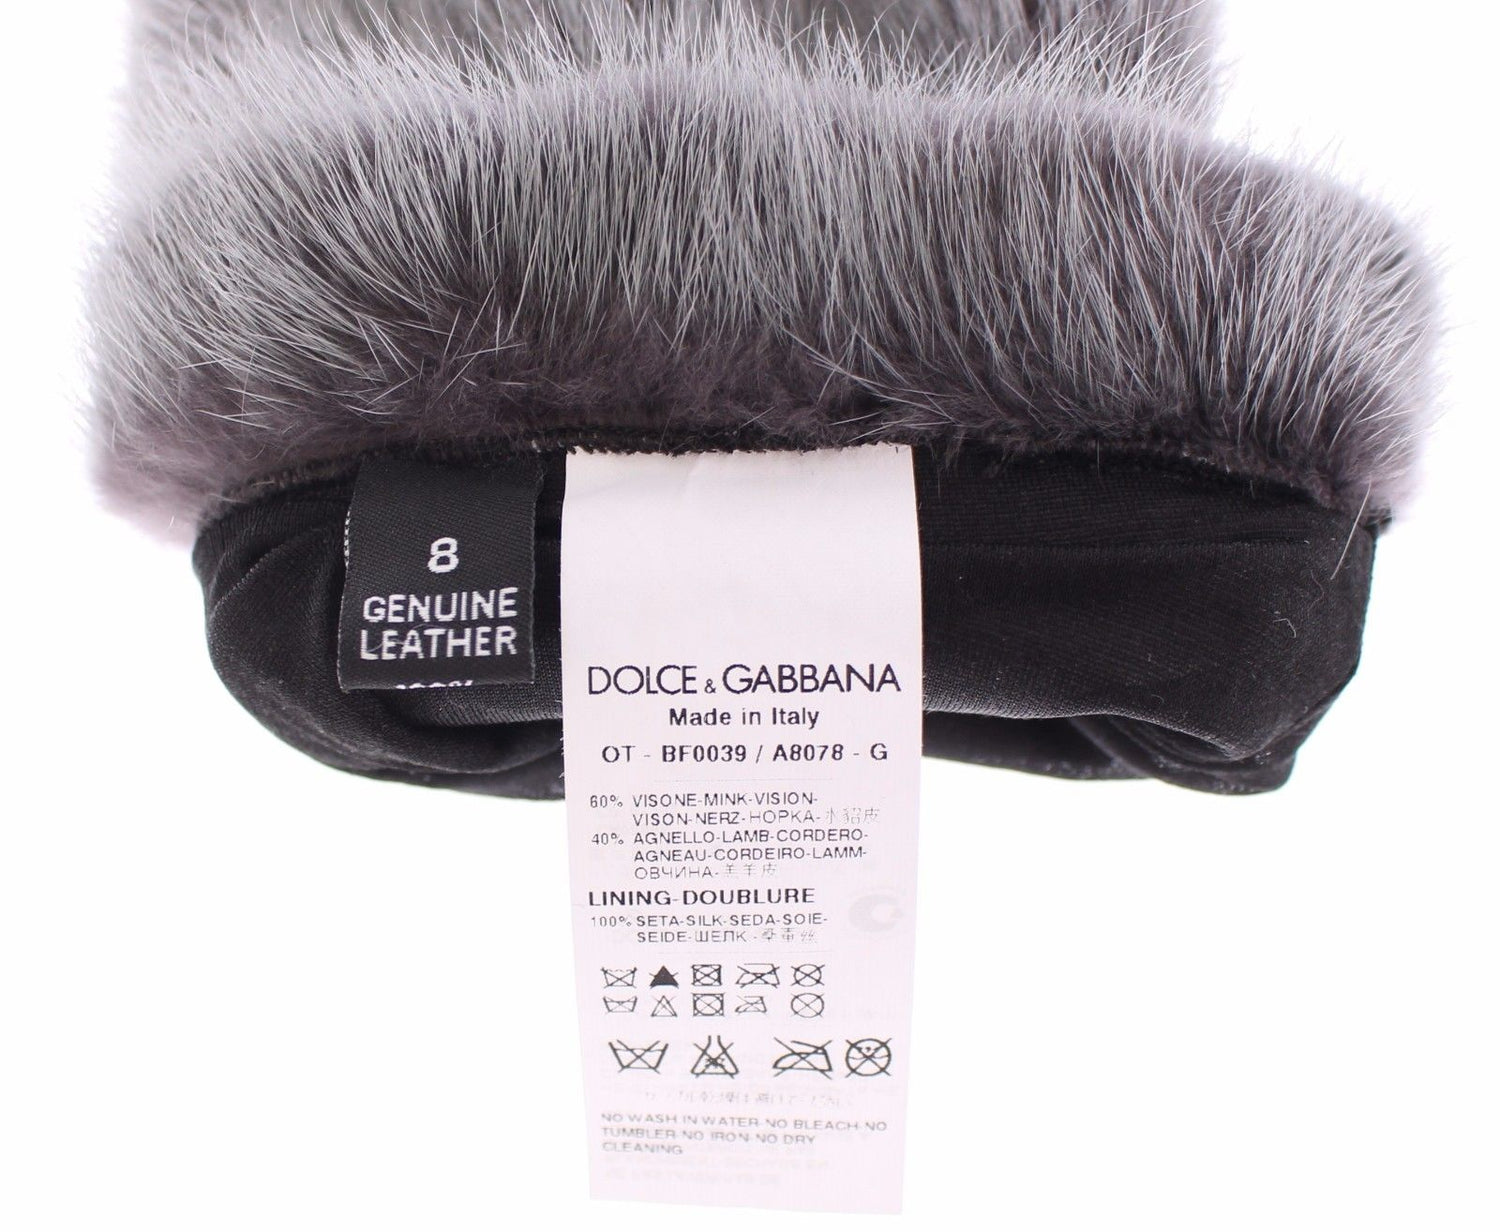 Gray Mink Fur Lambskin Suede Leather Gloves